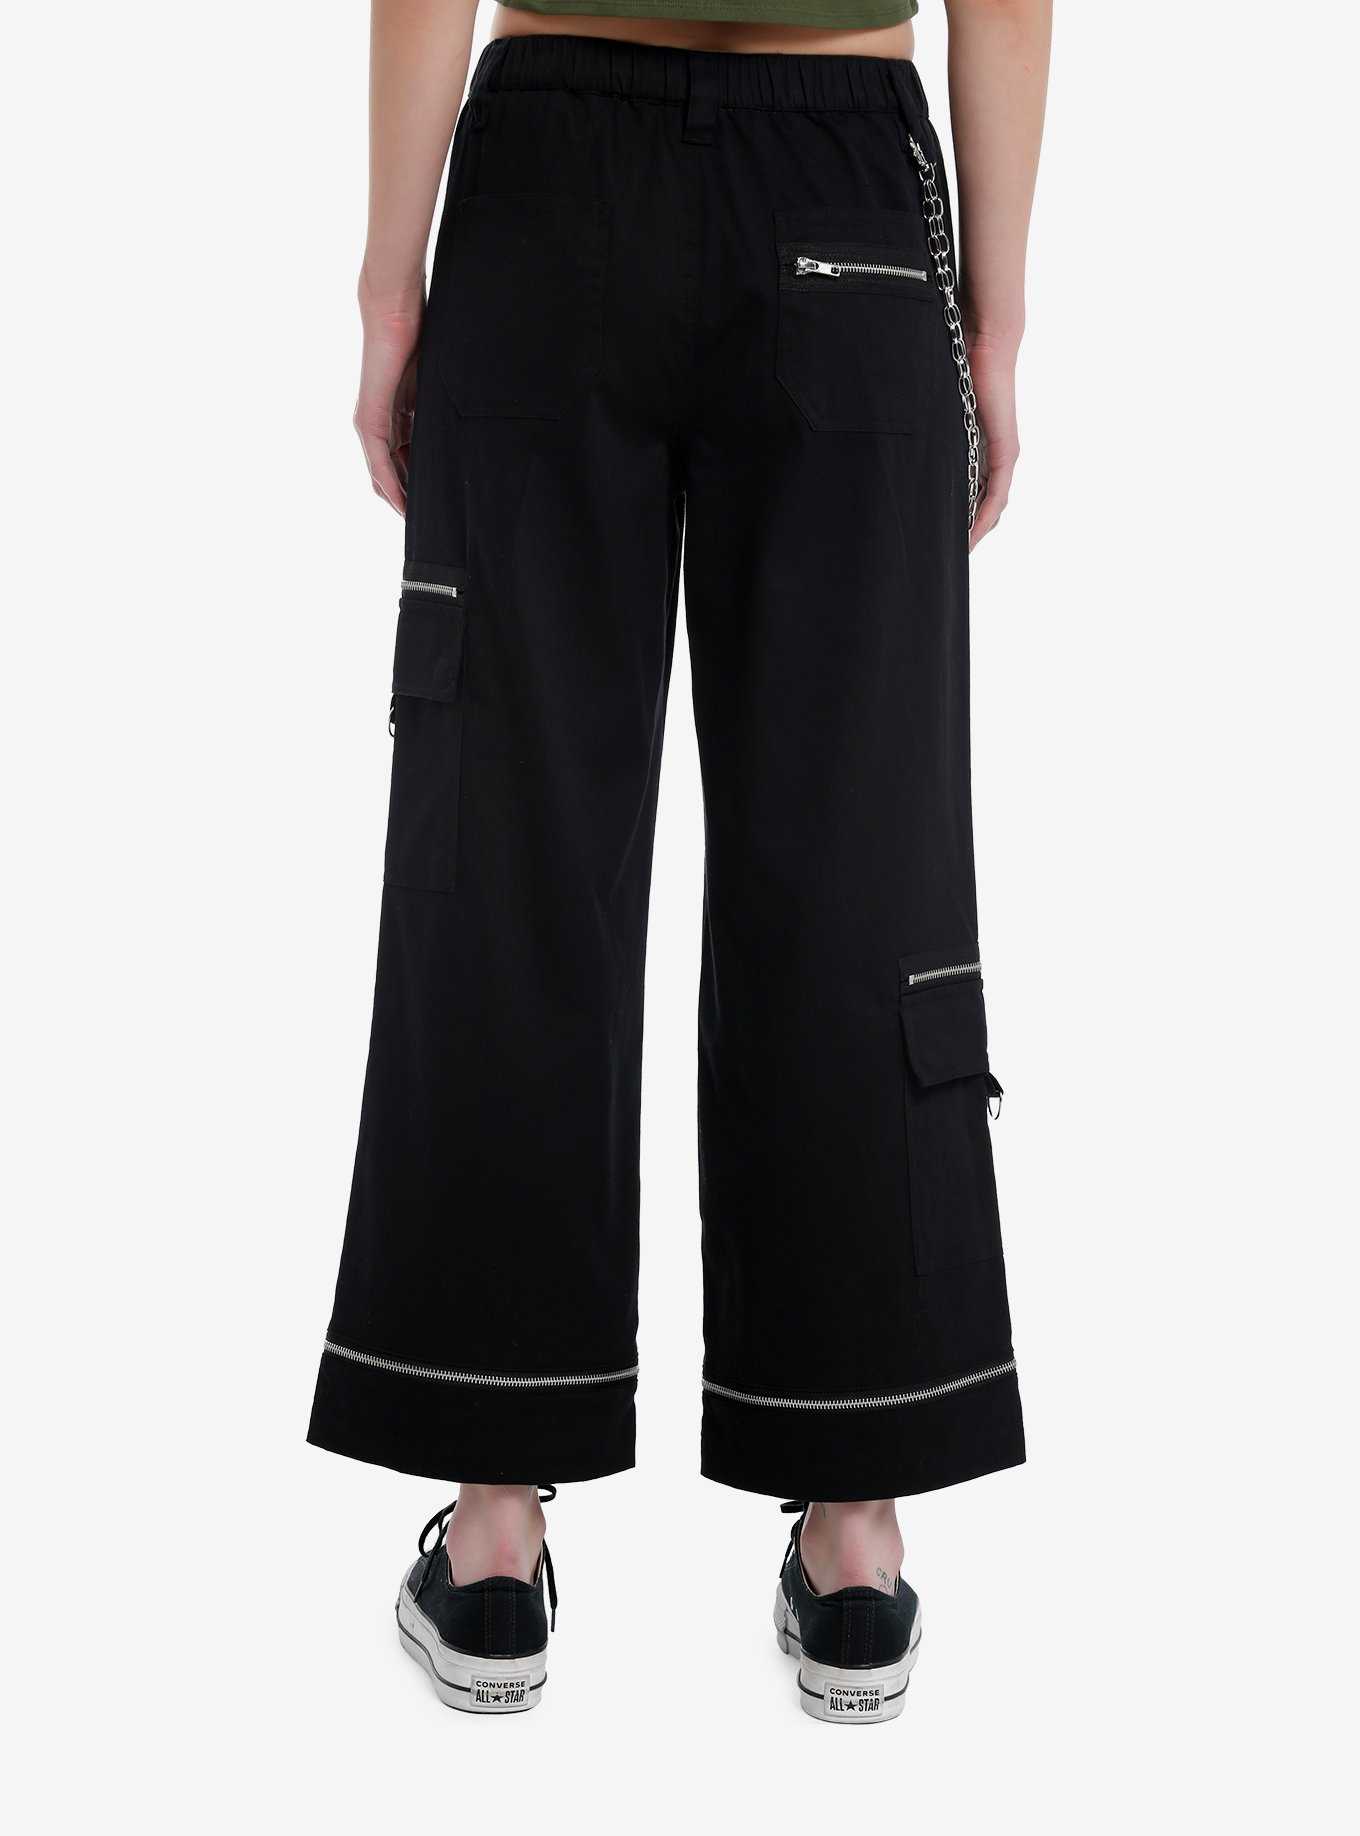 Black Zipper Side Chain Cargo Skater Pants, , hi-res